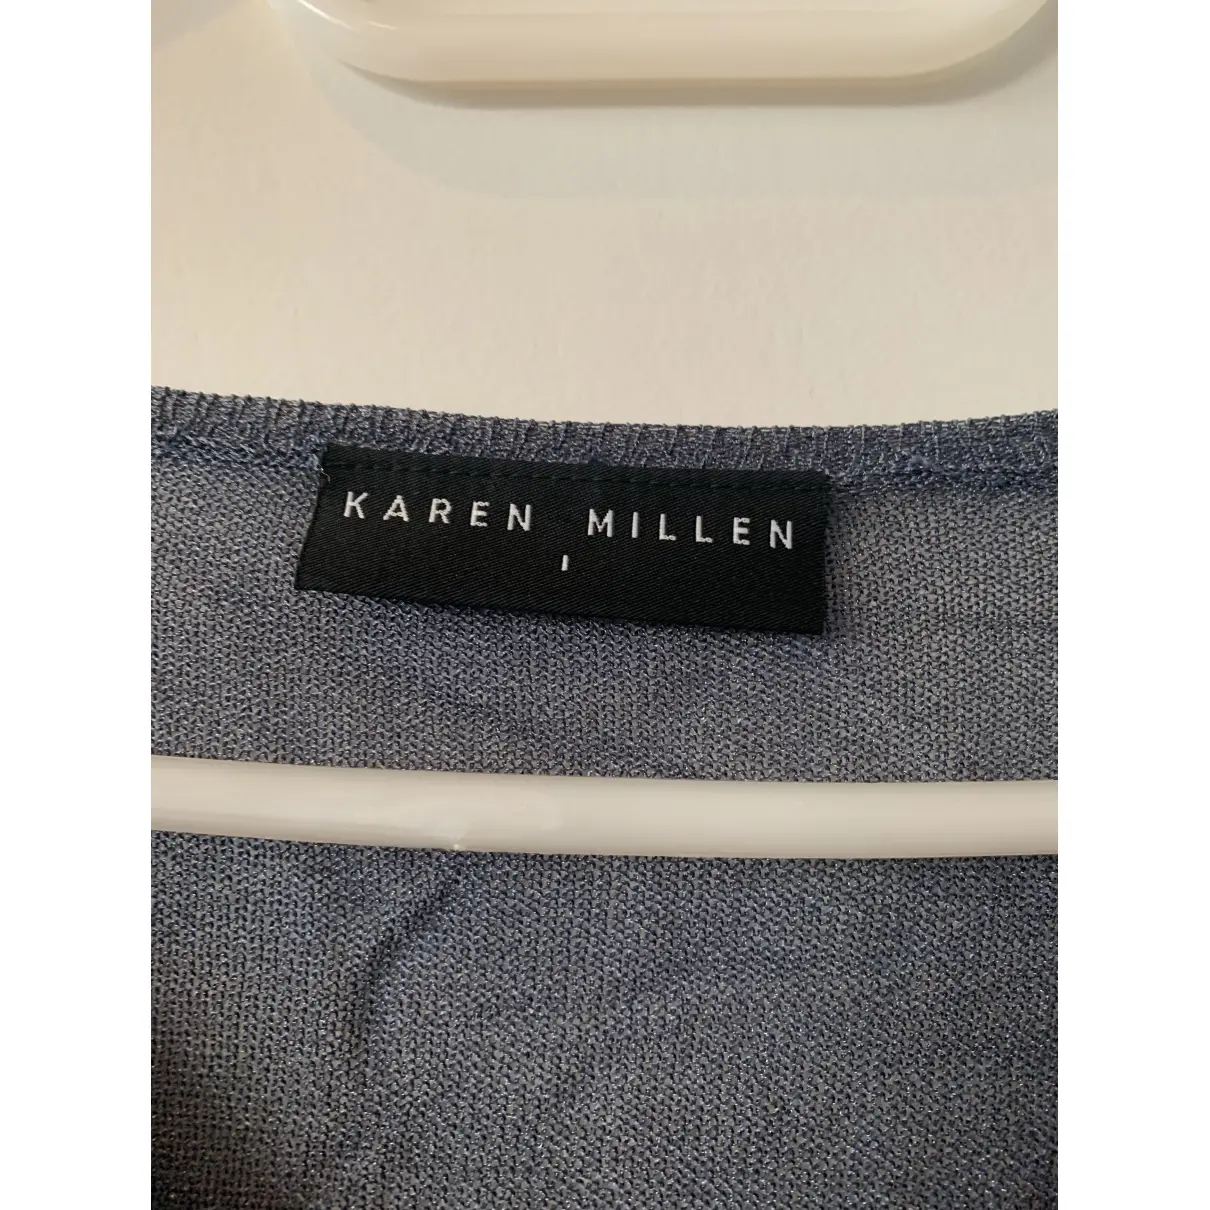 Buy Karen Millen Blue Viscose Knitwear online - Vintage